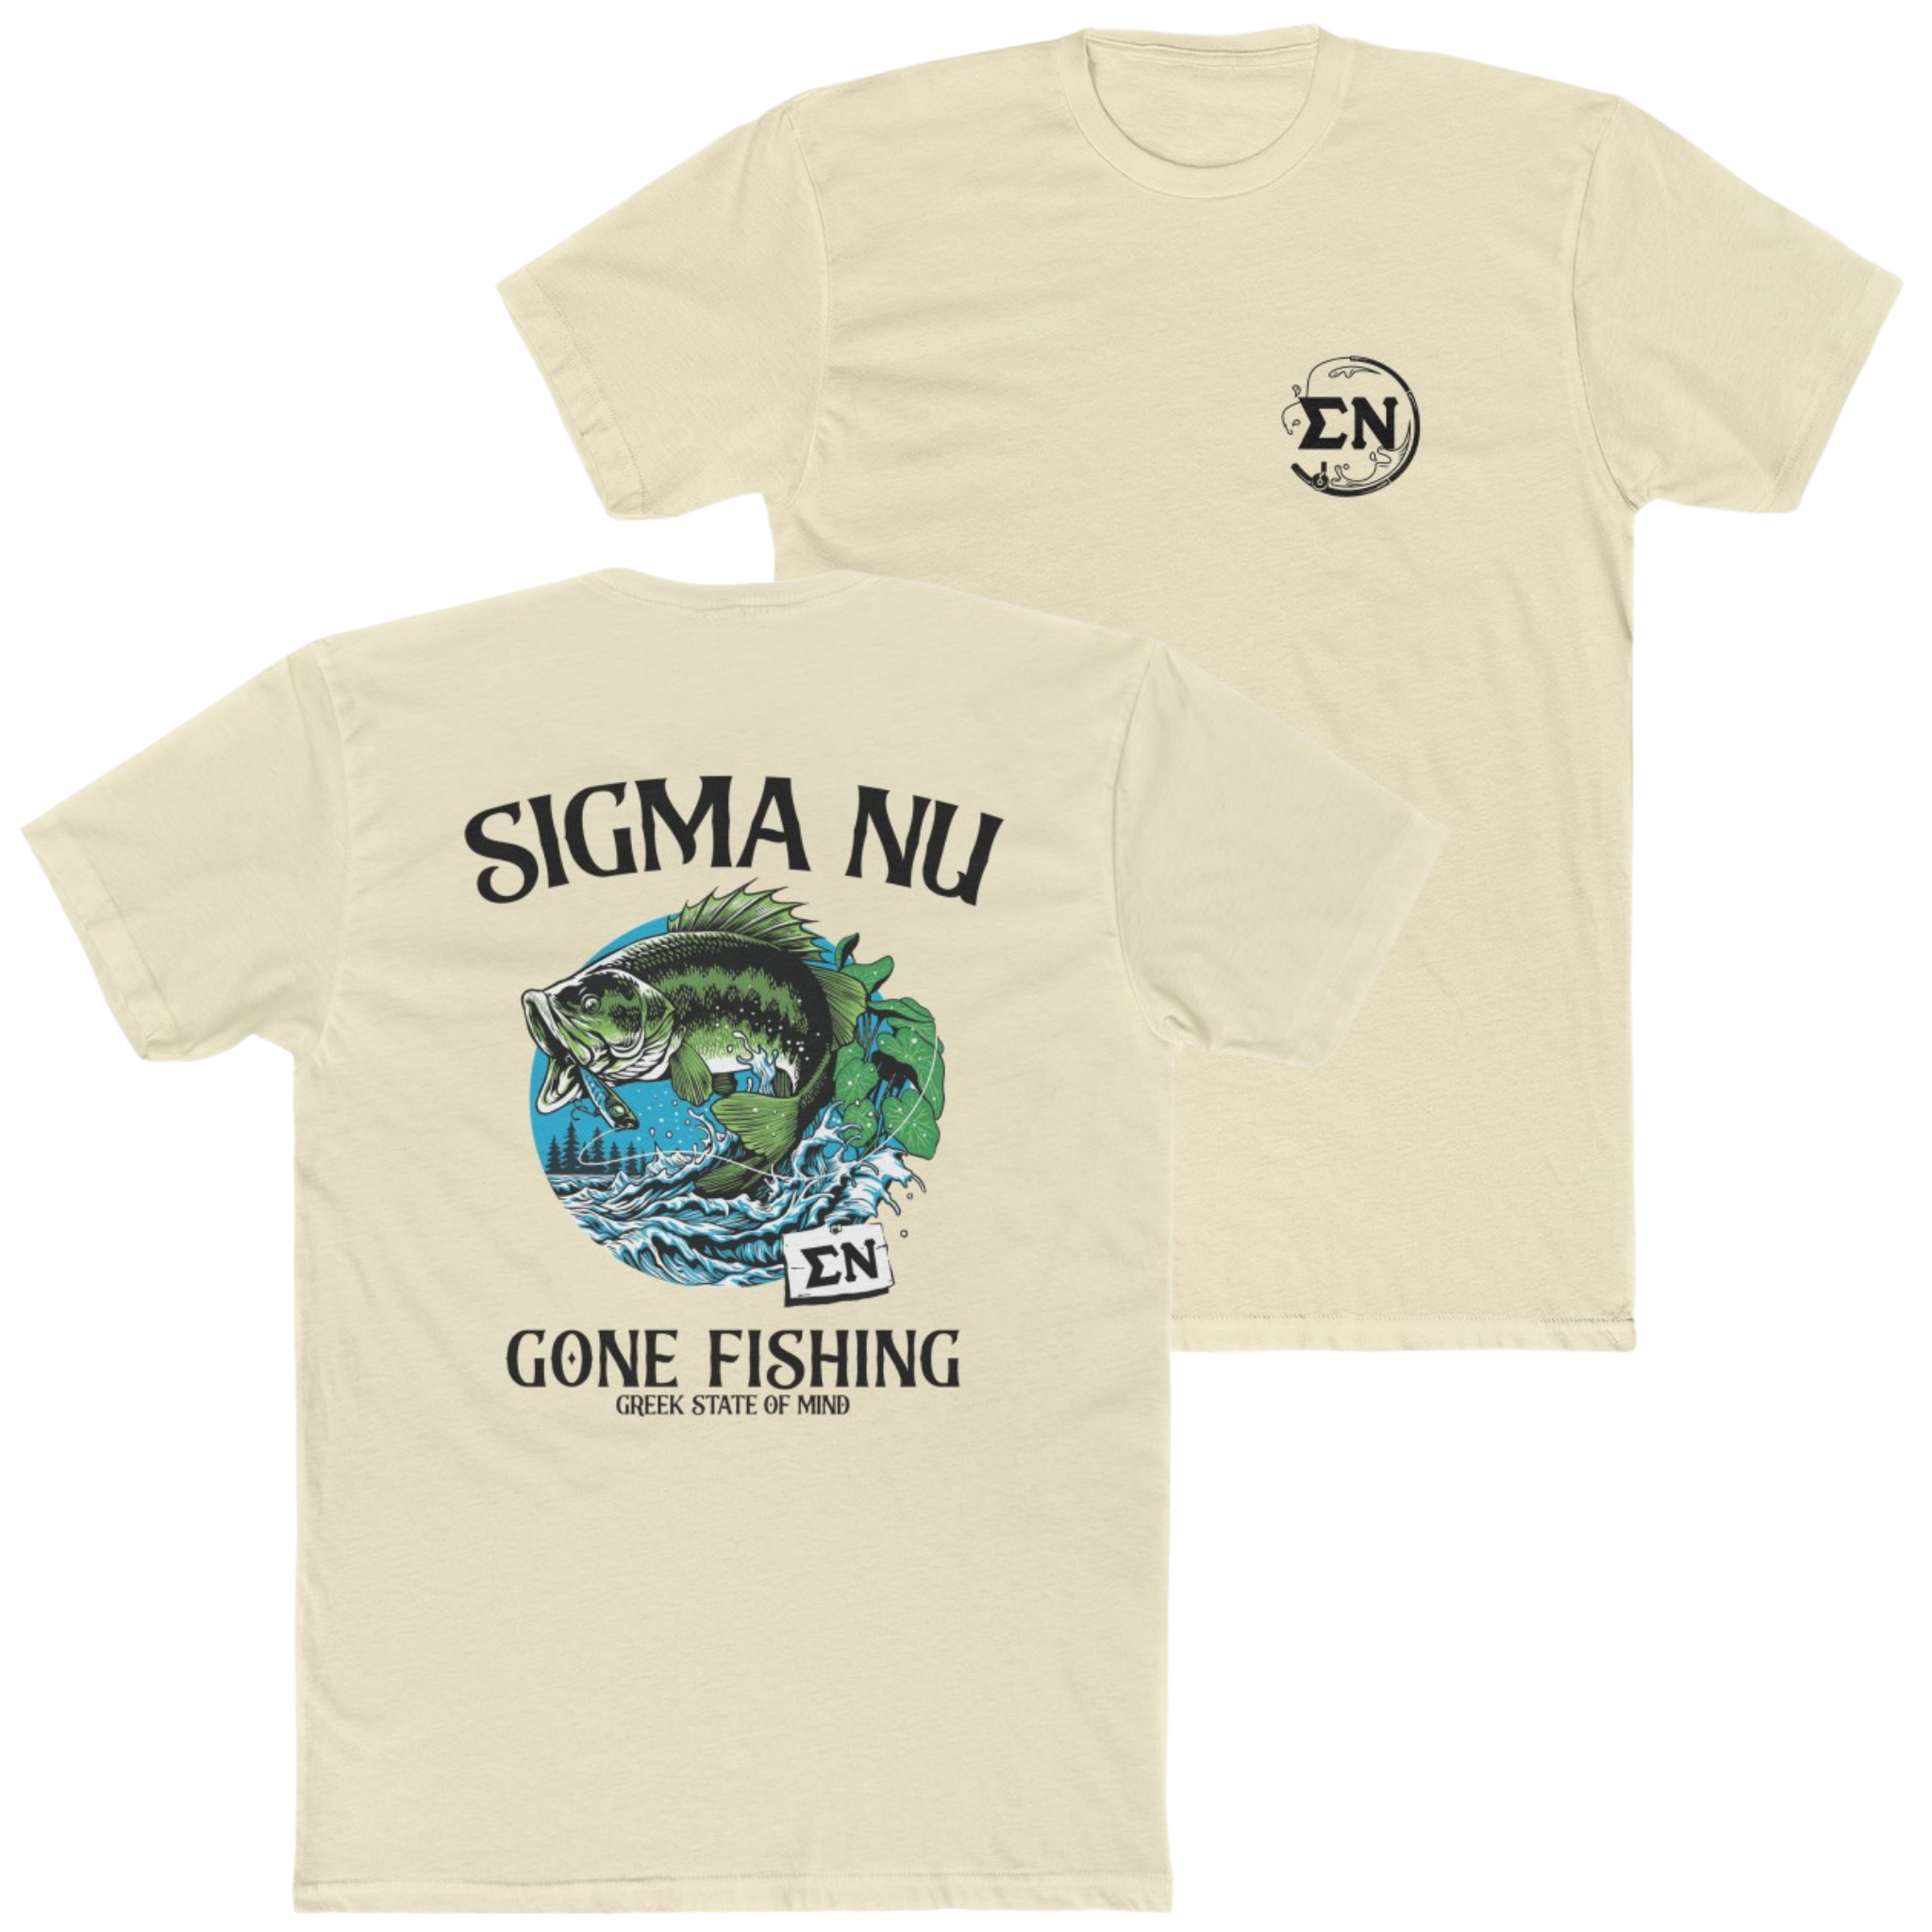 Sigma Nu Graphic T-shirt Gone Fishing 